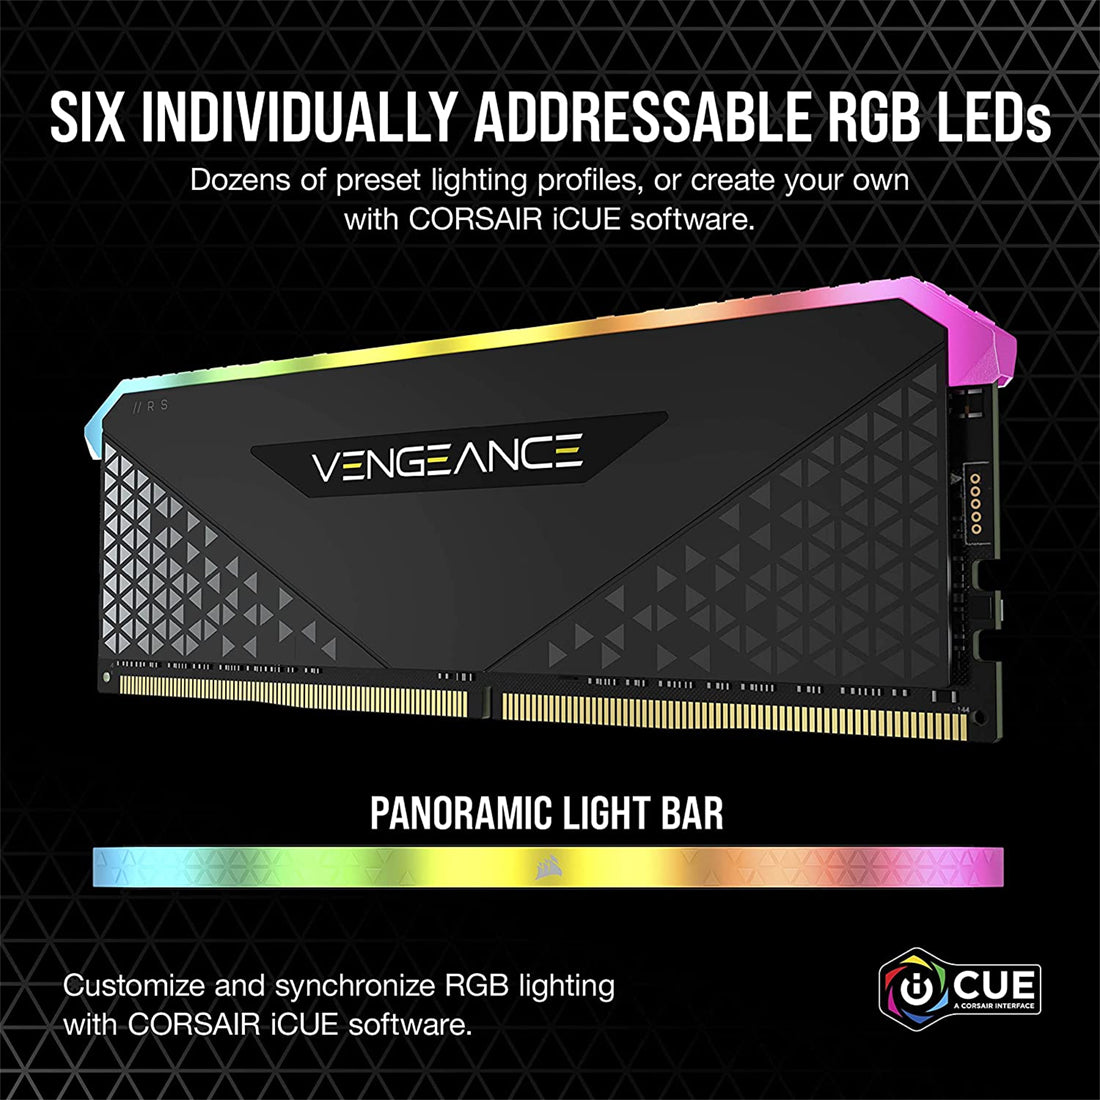 Corsair Vengeance RGB RS 8GB DDR4 RAM 3200MHz C16 डेस्कटॉप मेमोरी